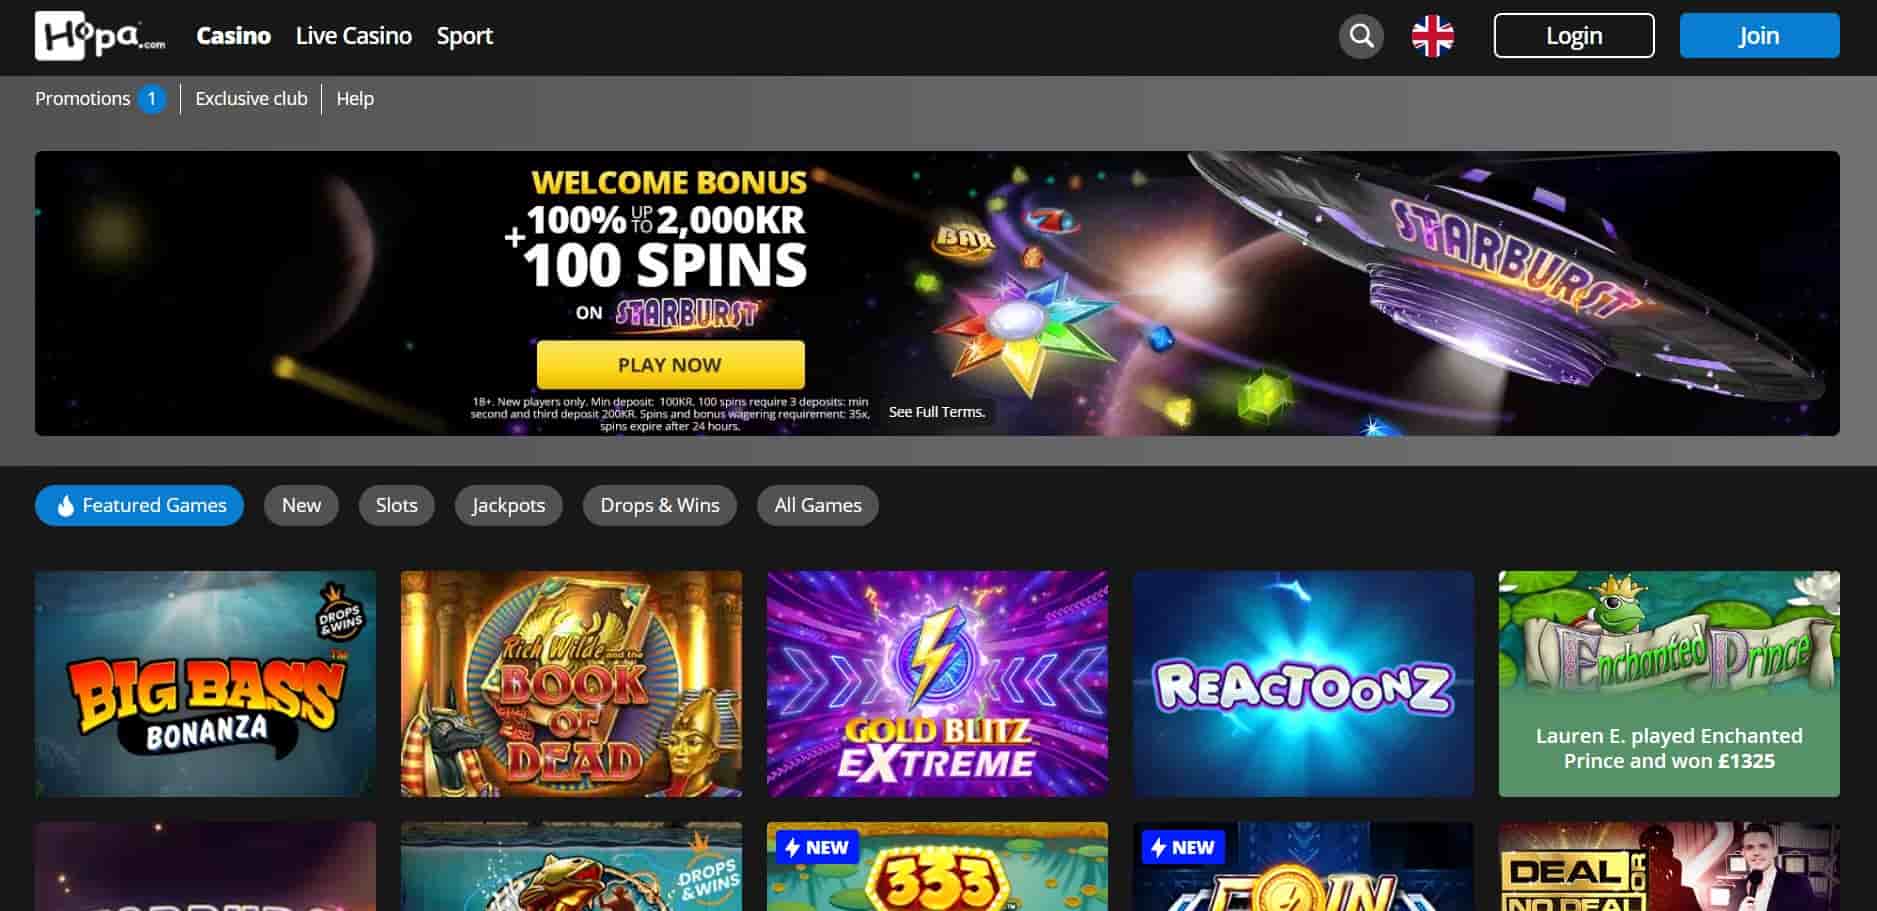 hopa casino main page